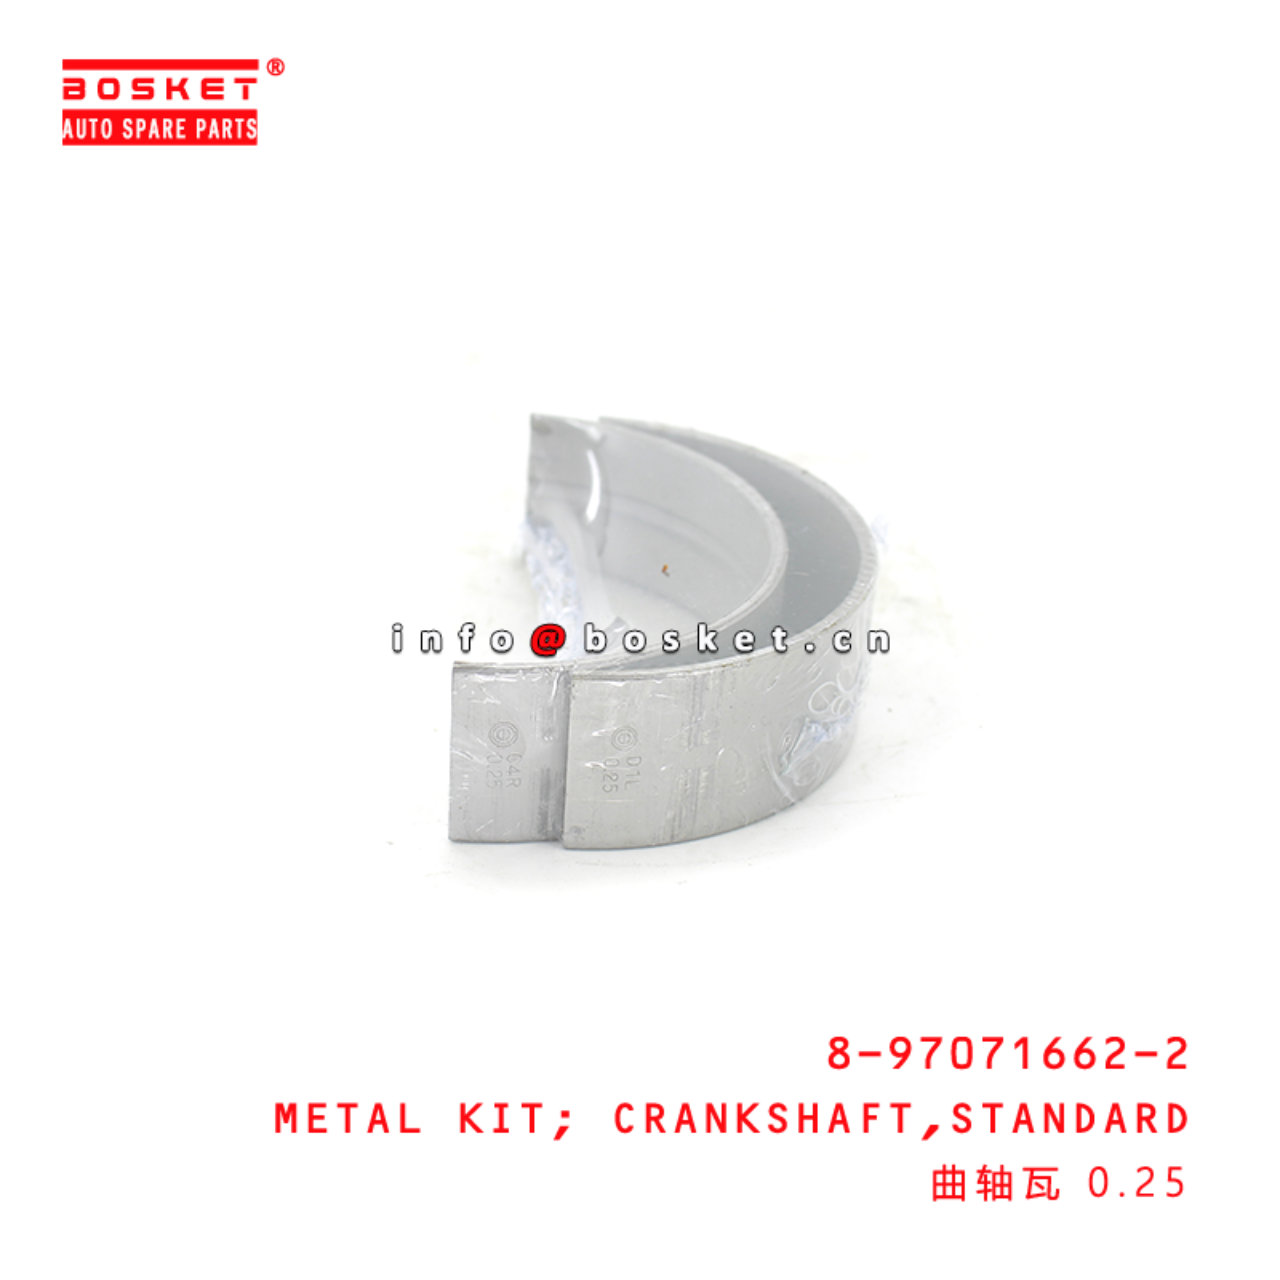 8-97071662-2 Standard Crankshaft Metal Kit Suitable for ISUZU NPR 8970716622